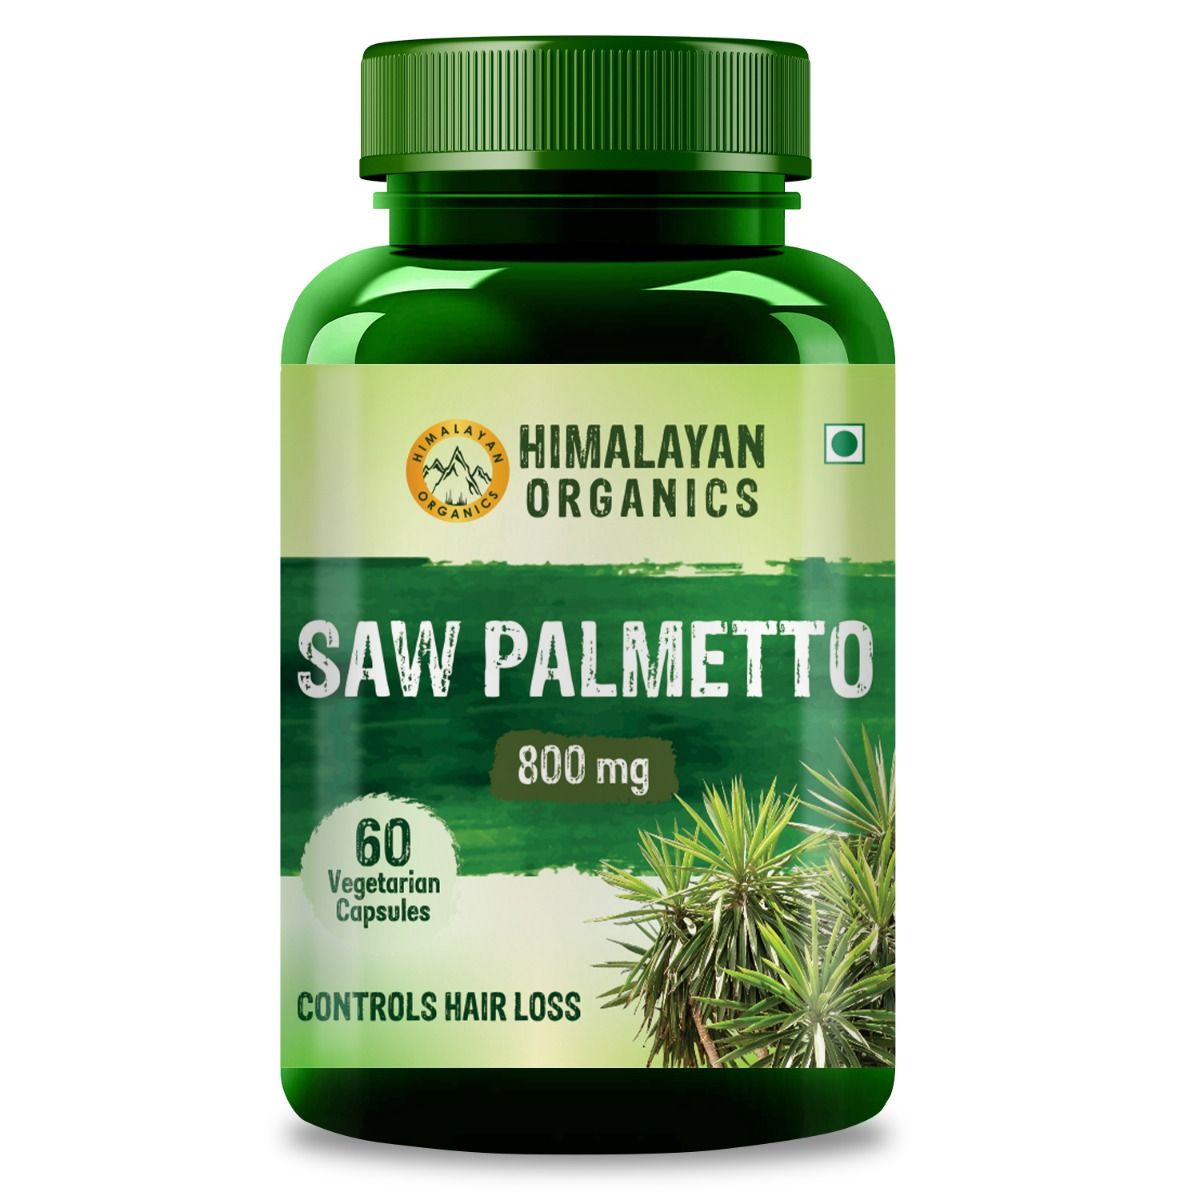 Buy Himalayan Organics Saw Palmetto 800 mg, 60 Capsules Online